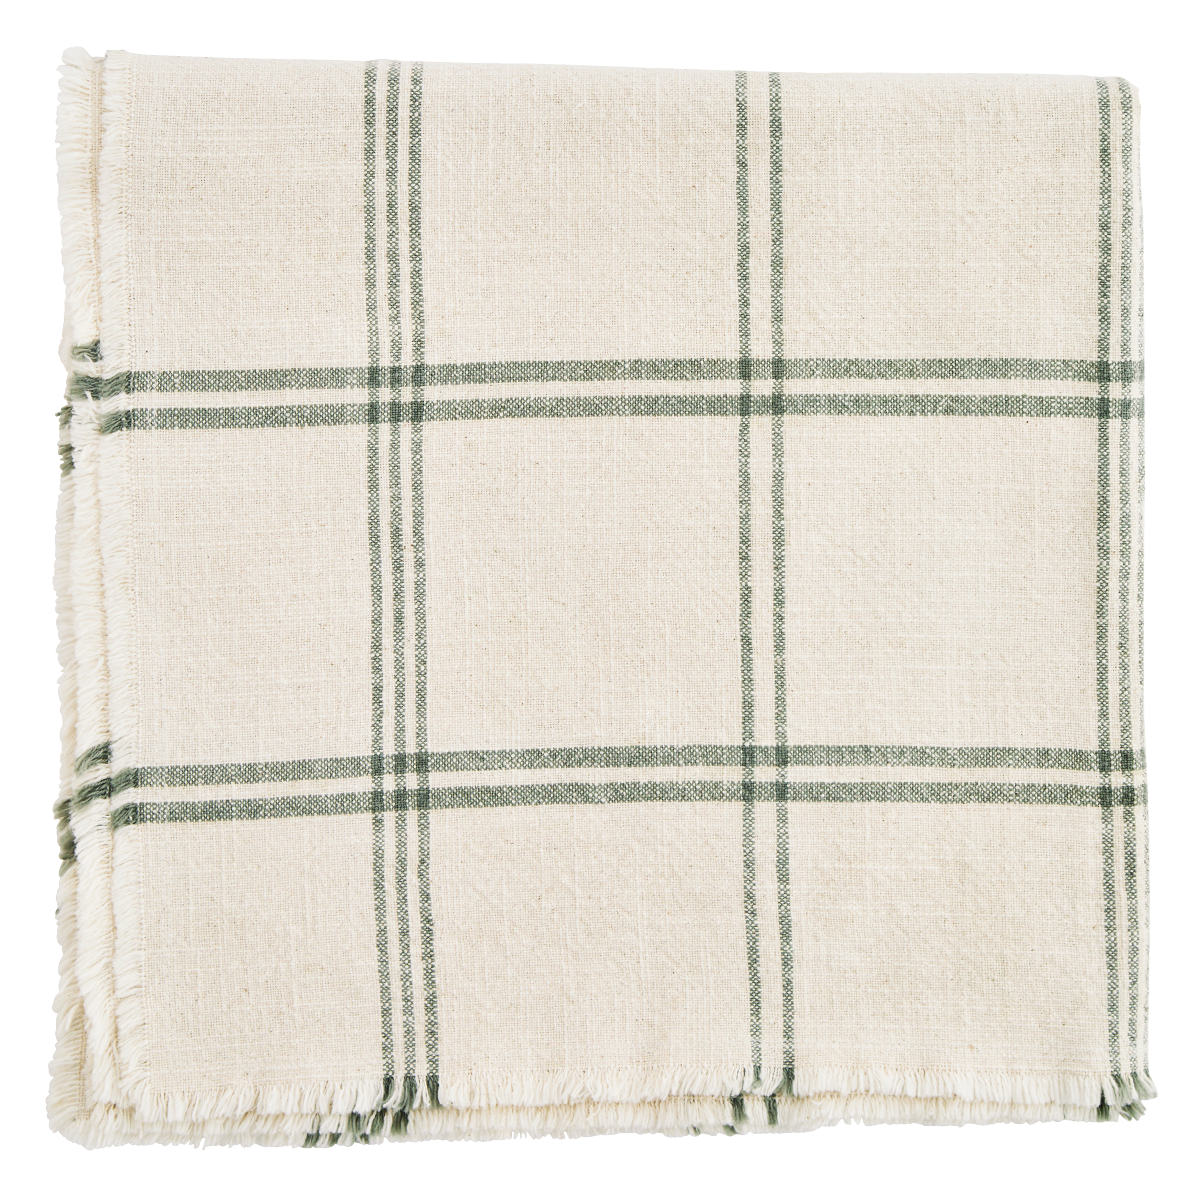 Checked cotton tablecloth 150x150